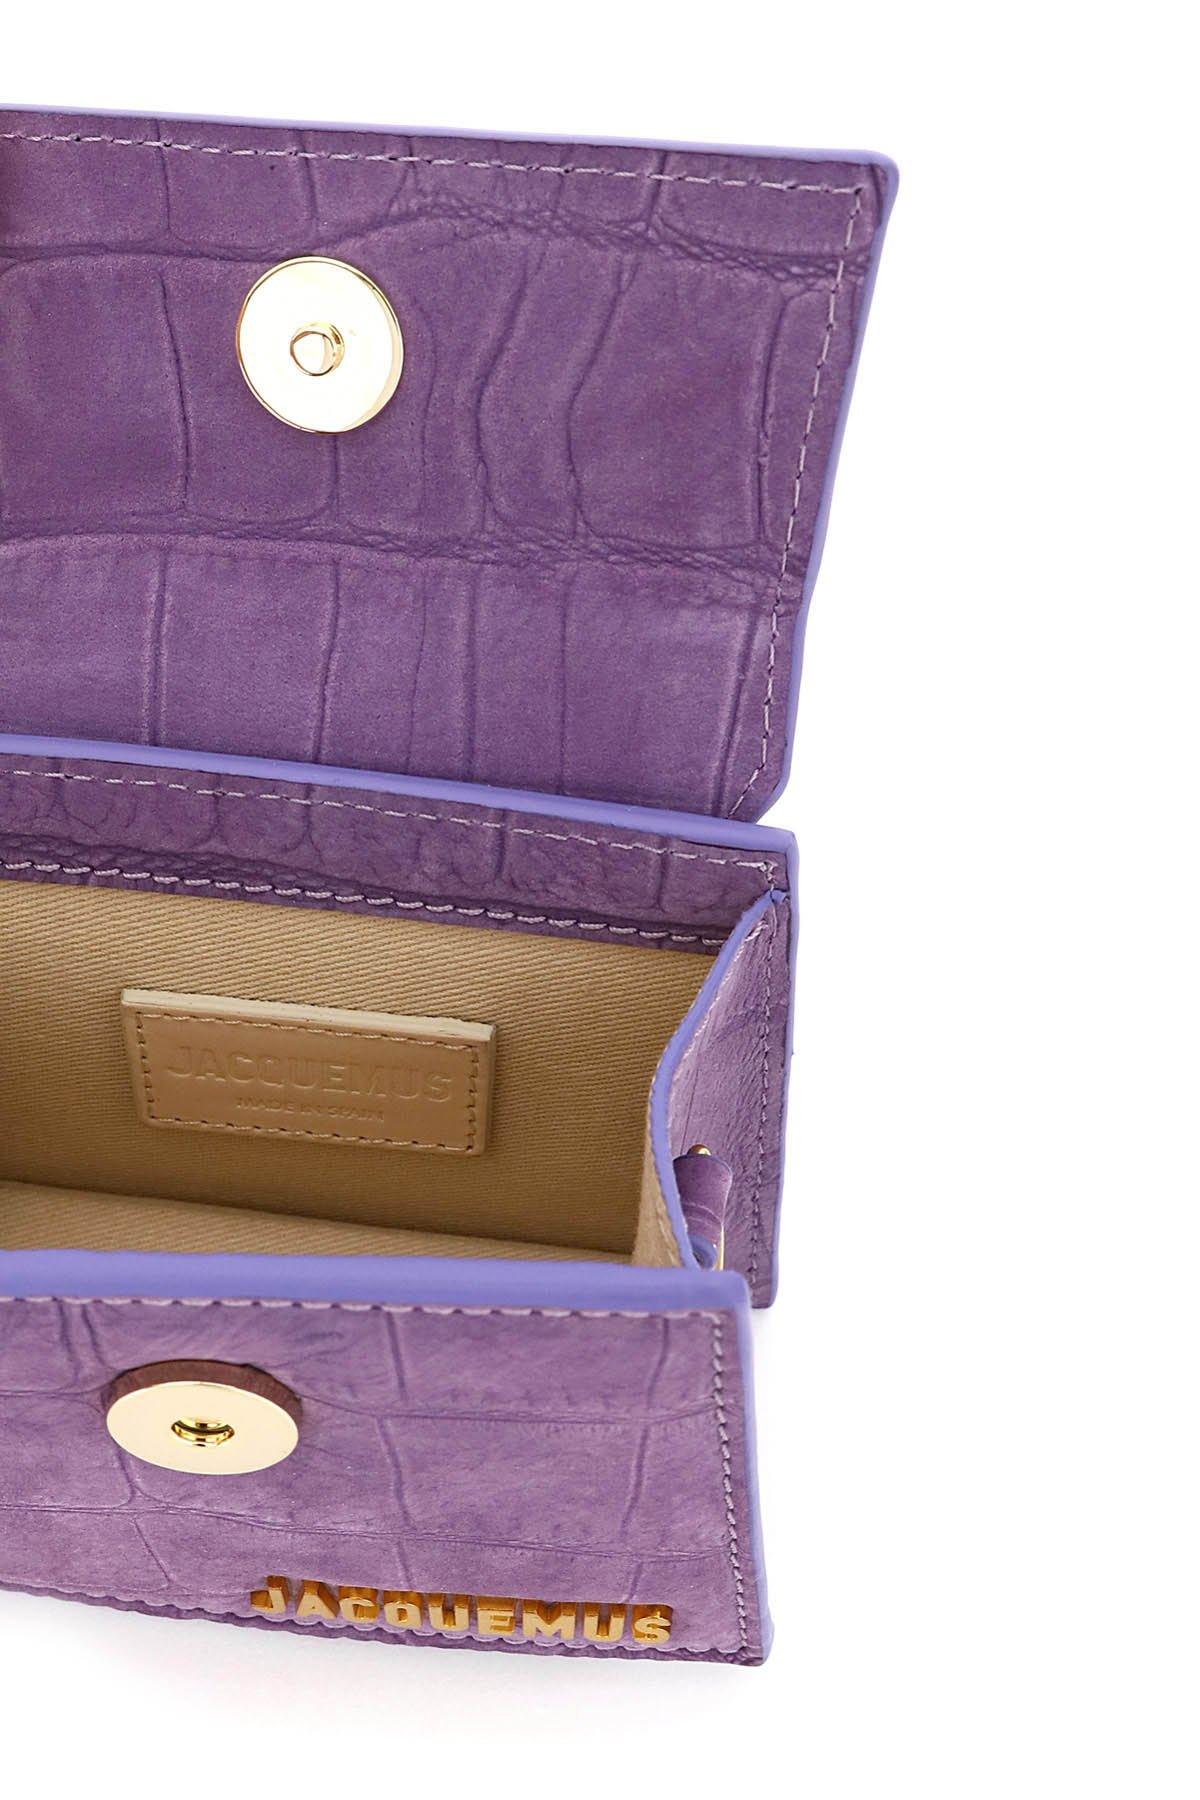 Jacquemus Suede Le Chiquito Micro Bag in Purple - Lyst